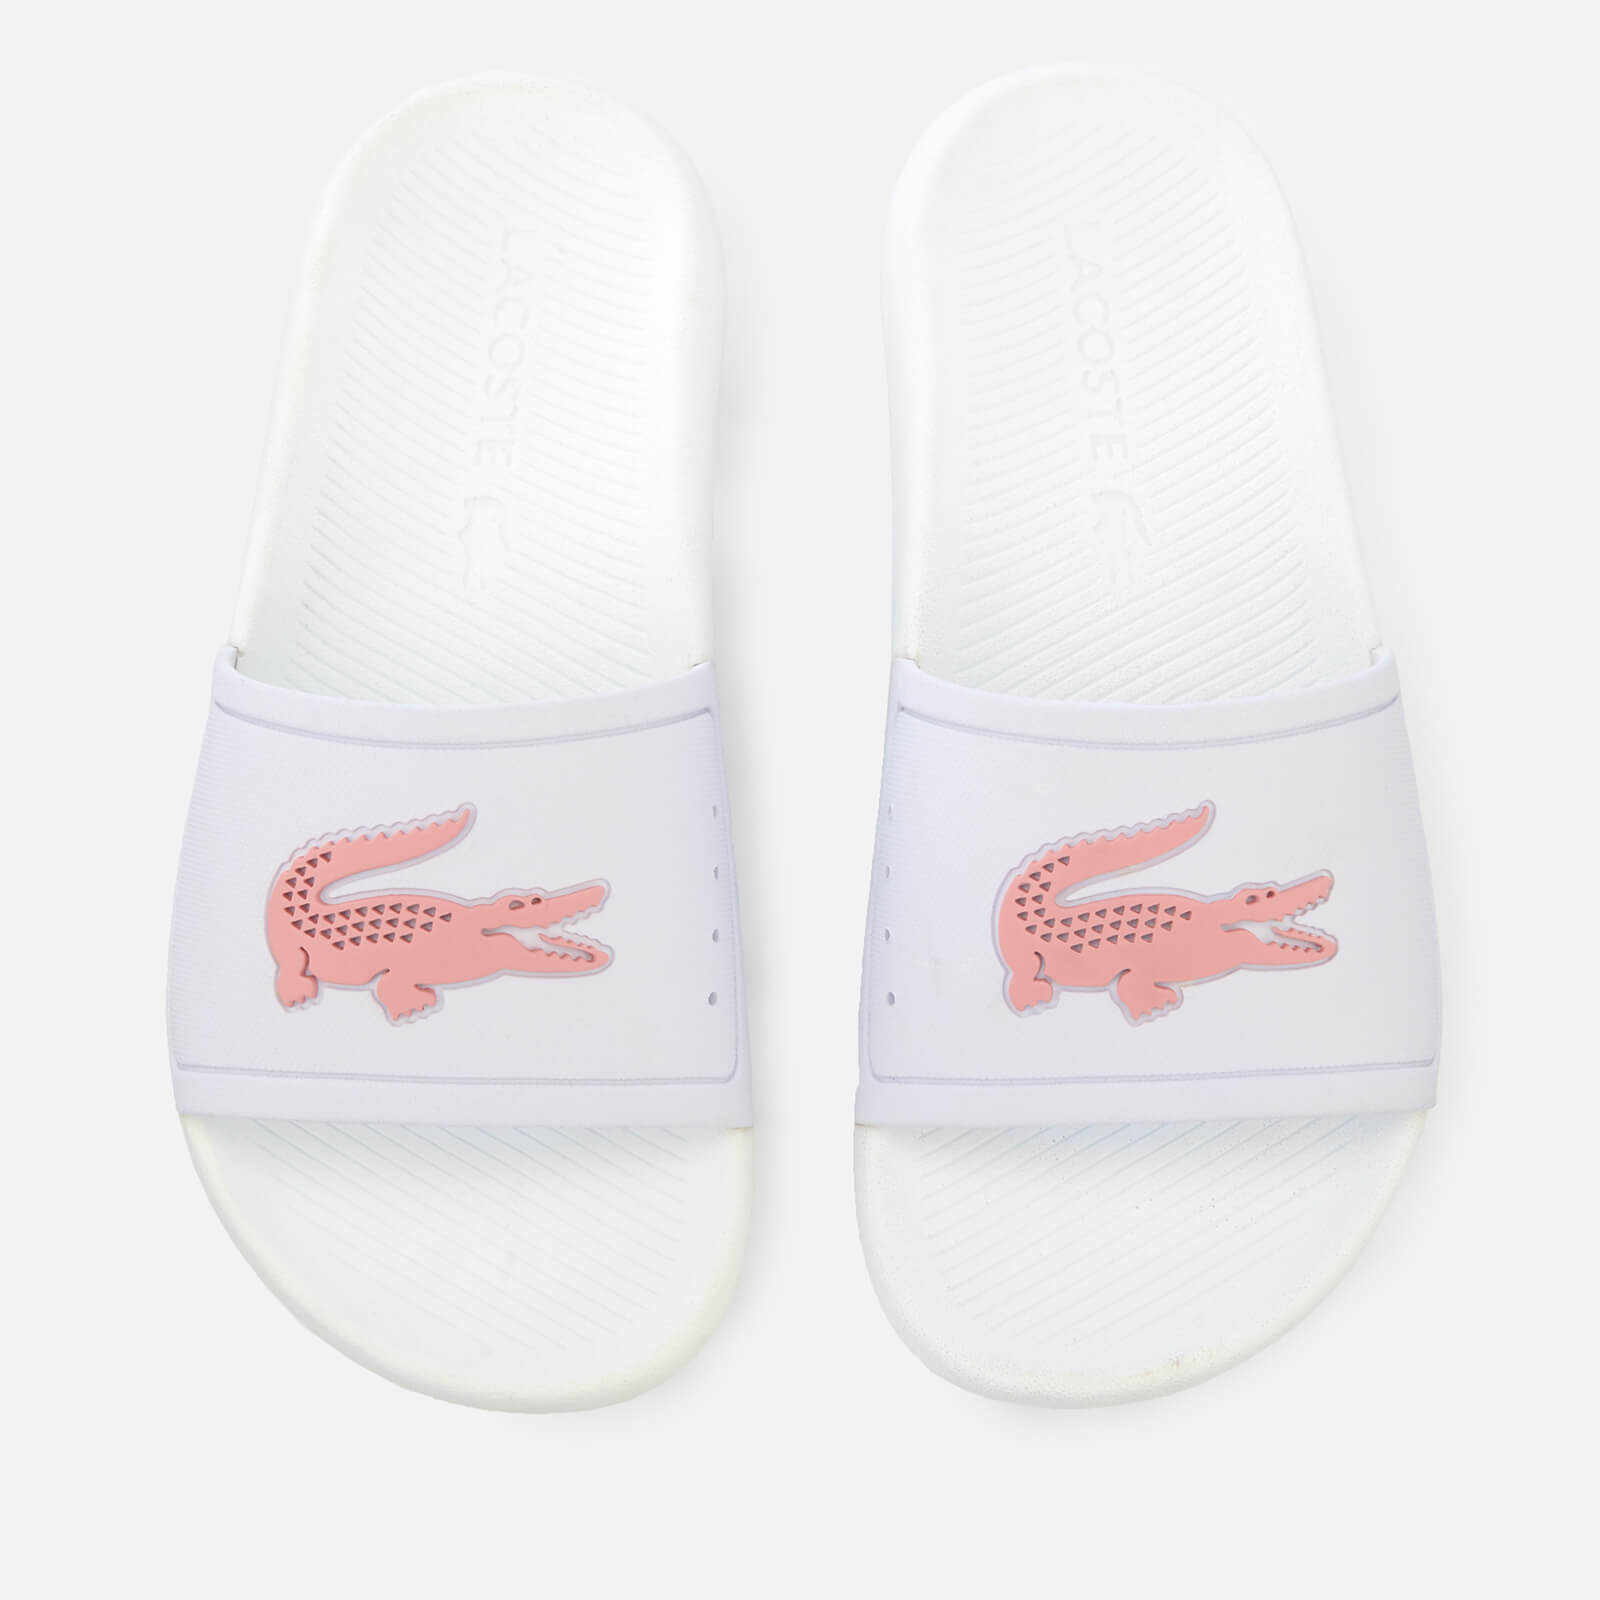 Lacoste Women's Croco Slide 119 3 Sandals - White/Light Pink - UK 5 - White/Pink